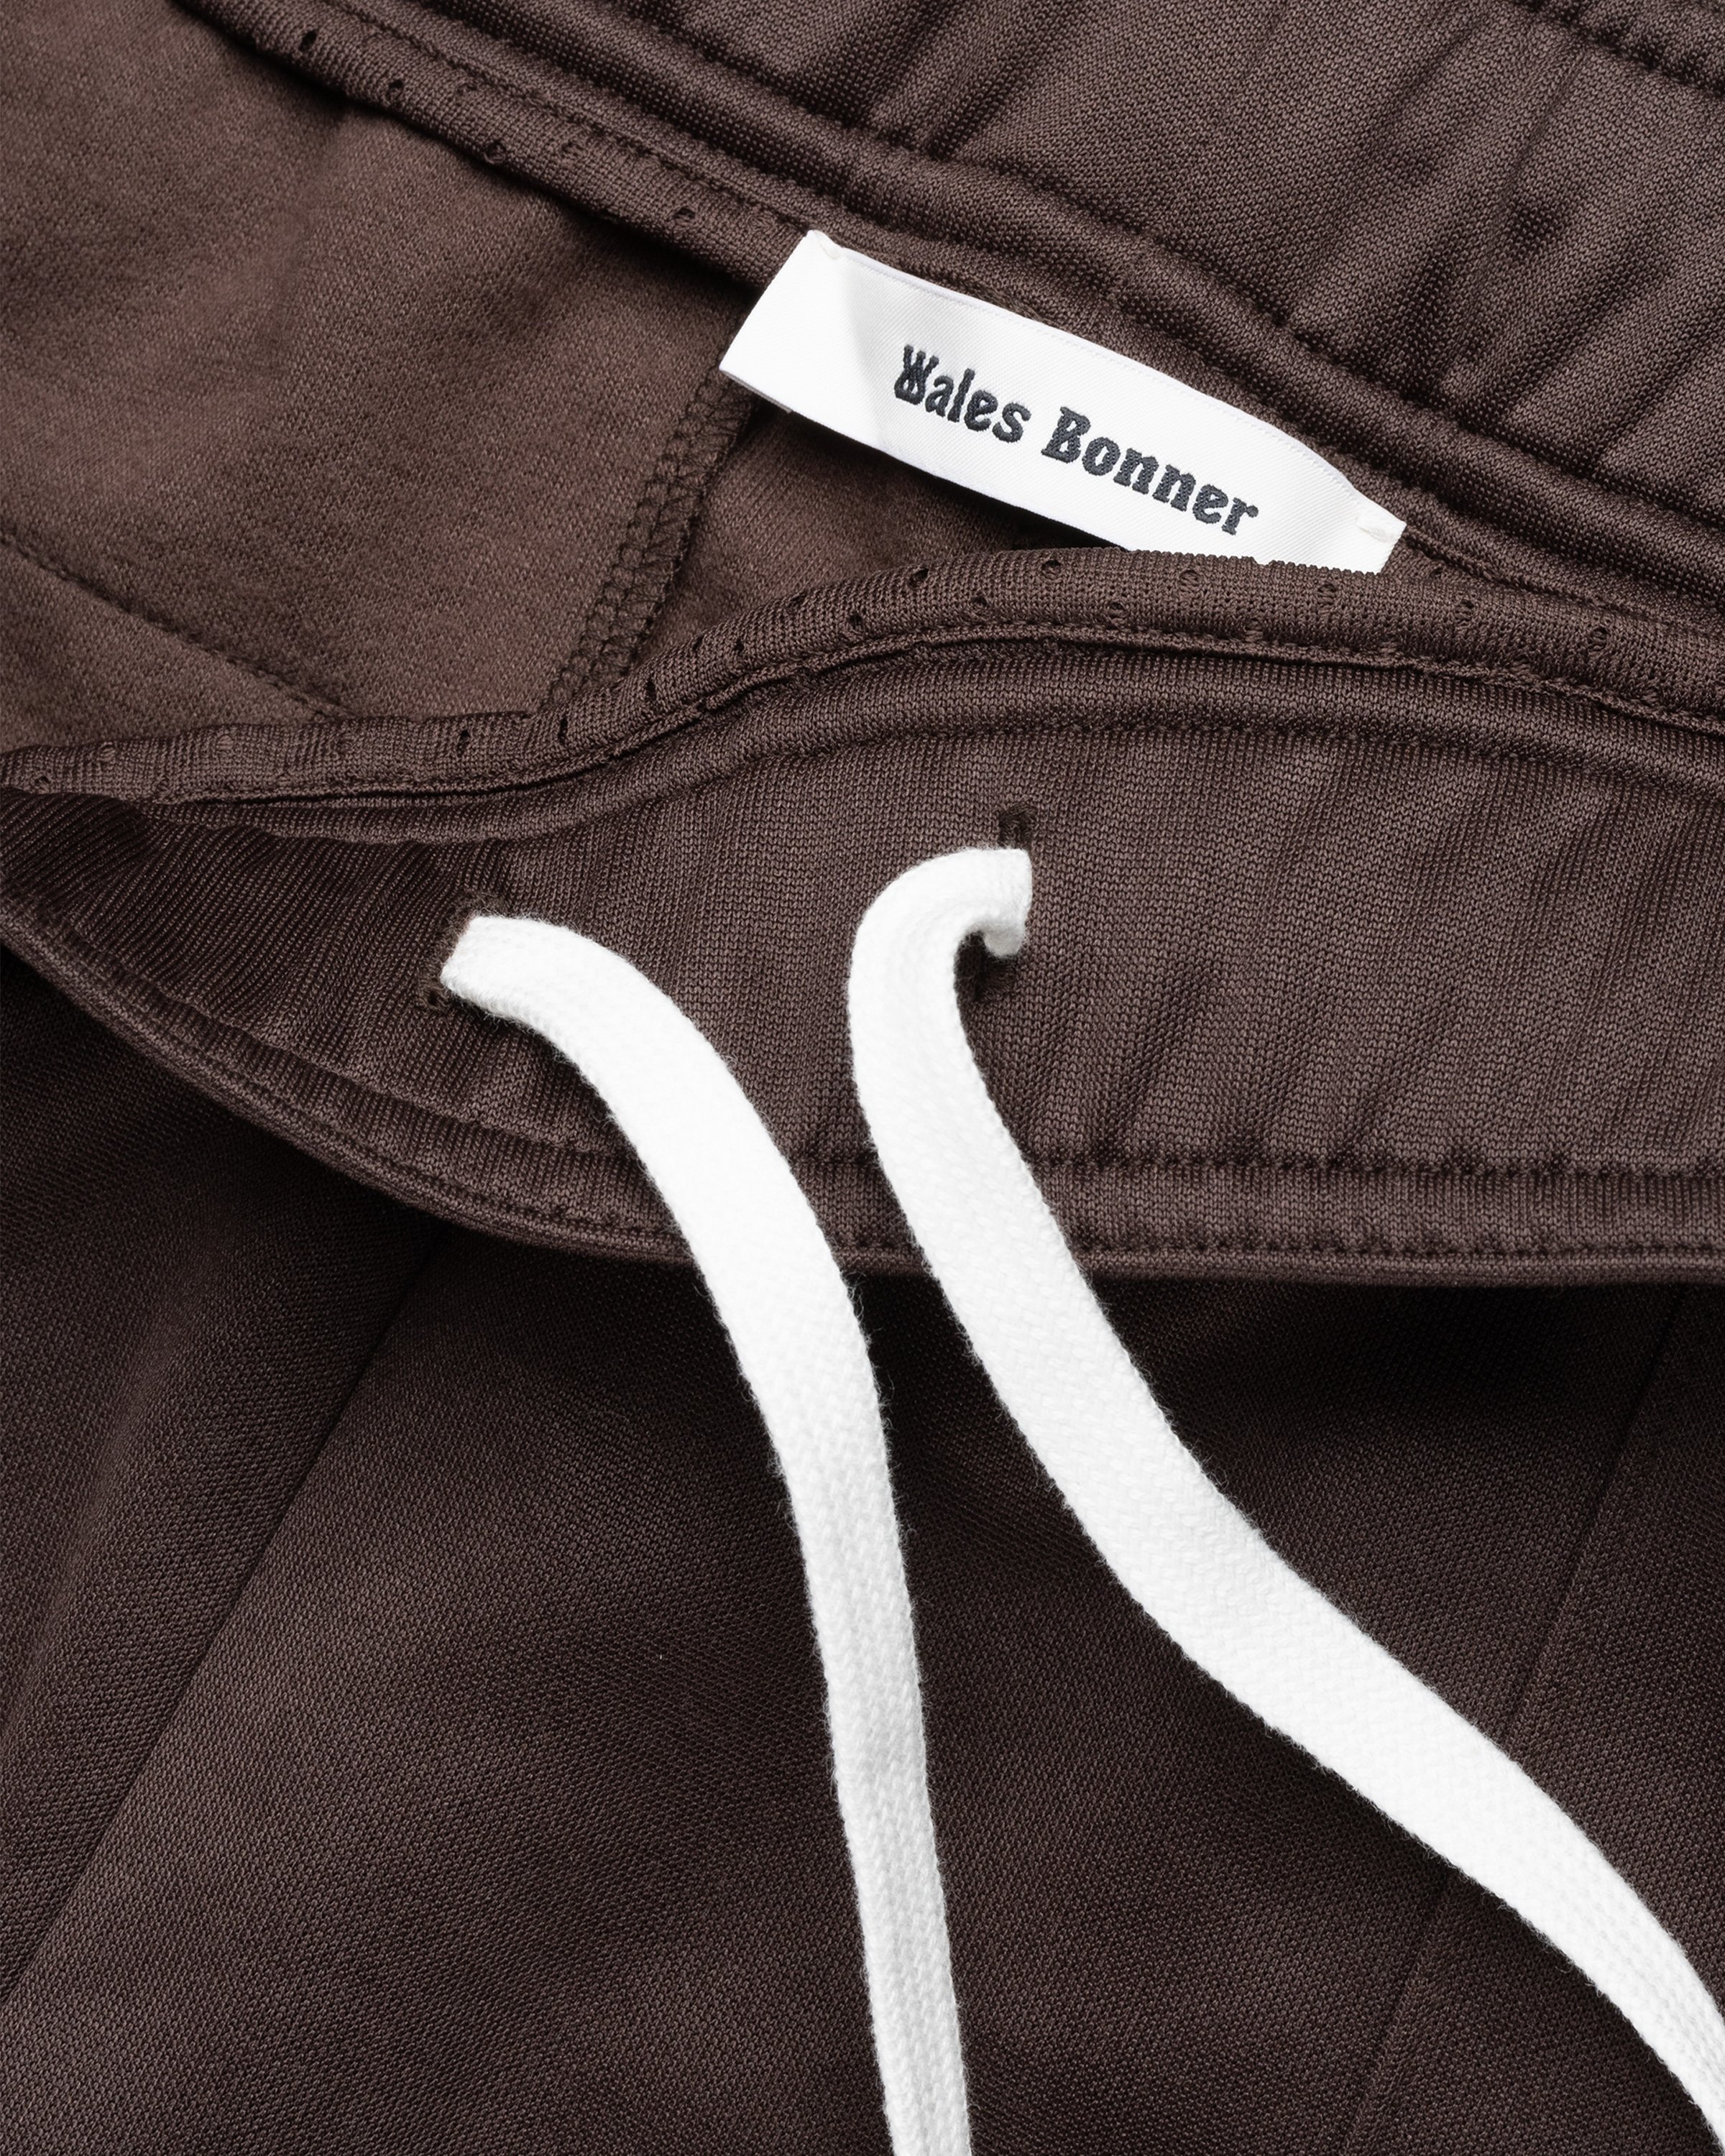 Wales Bonner - Kola Trackpants Brown/Ivory - Clothing - Brown - Image 7